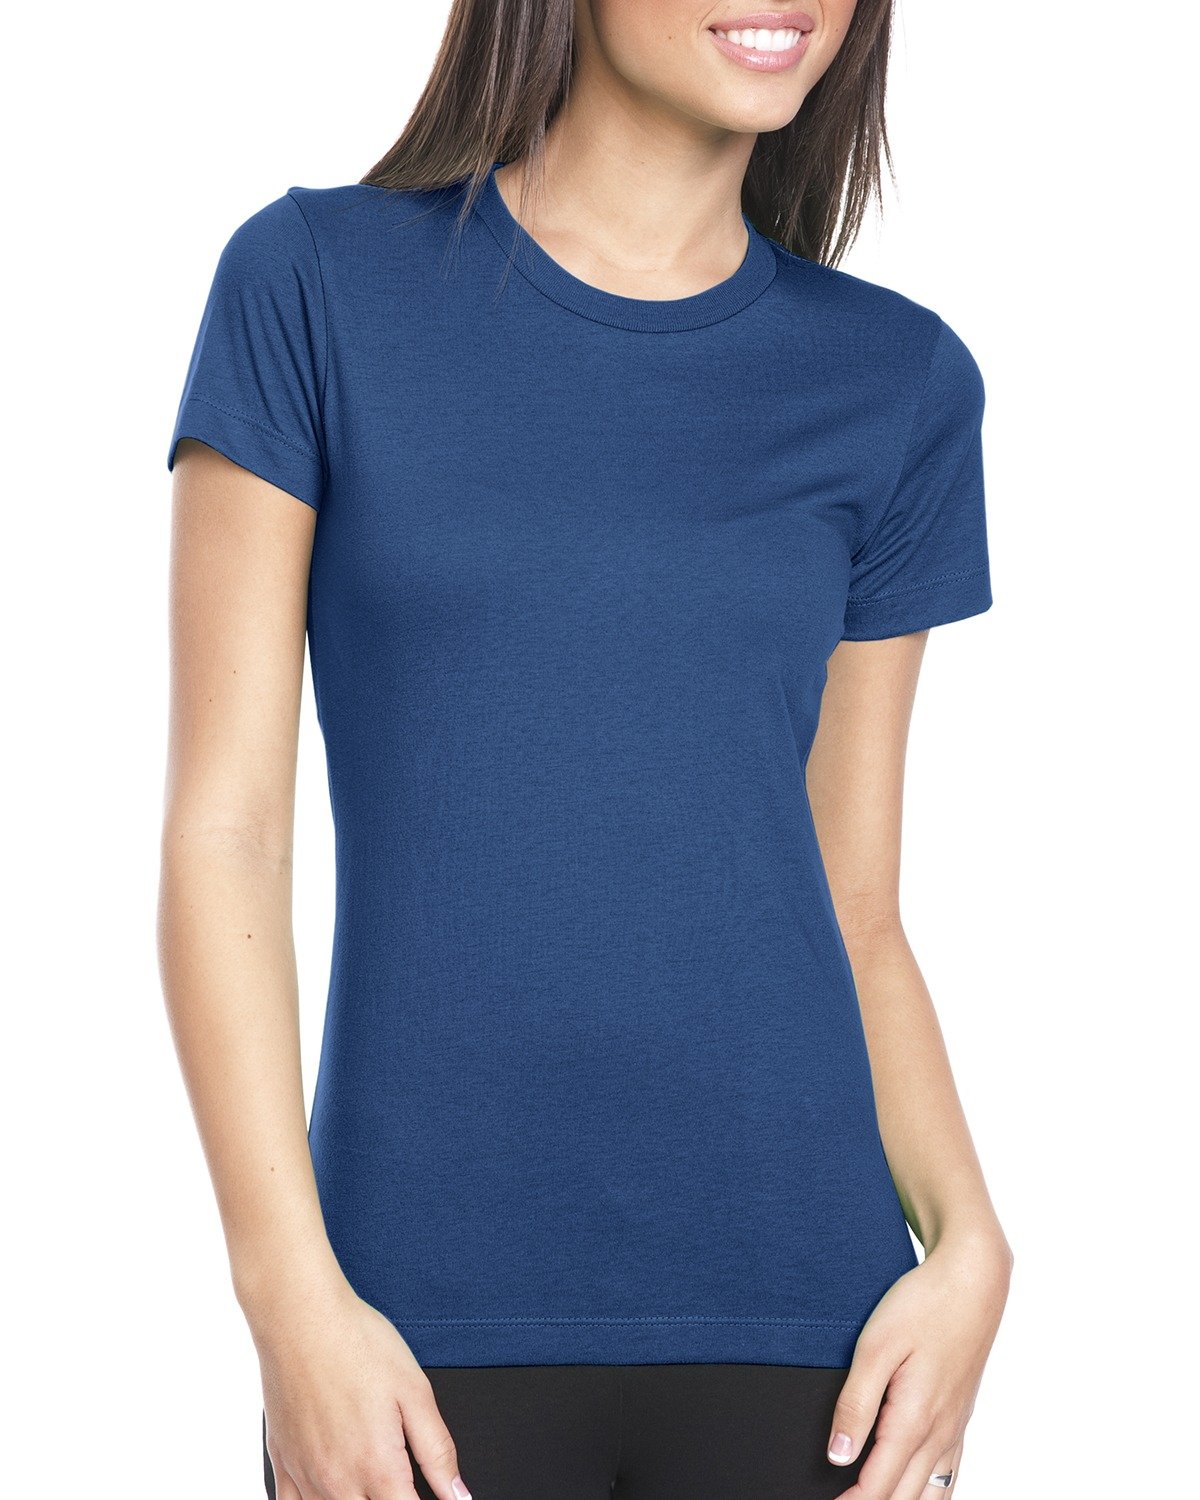 Next Level Apparel Ladies' T-Shirt COOL BLUE 